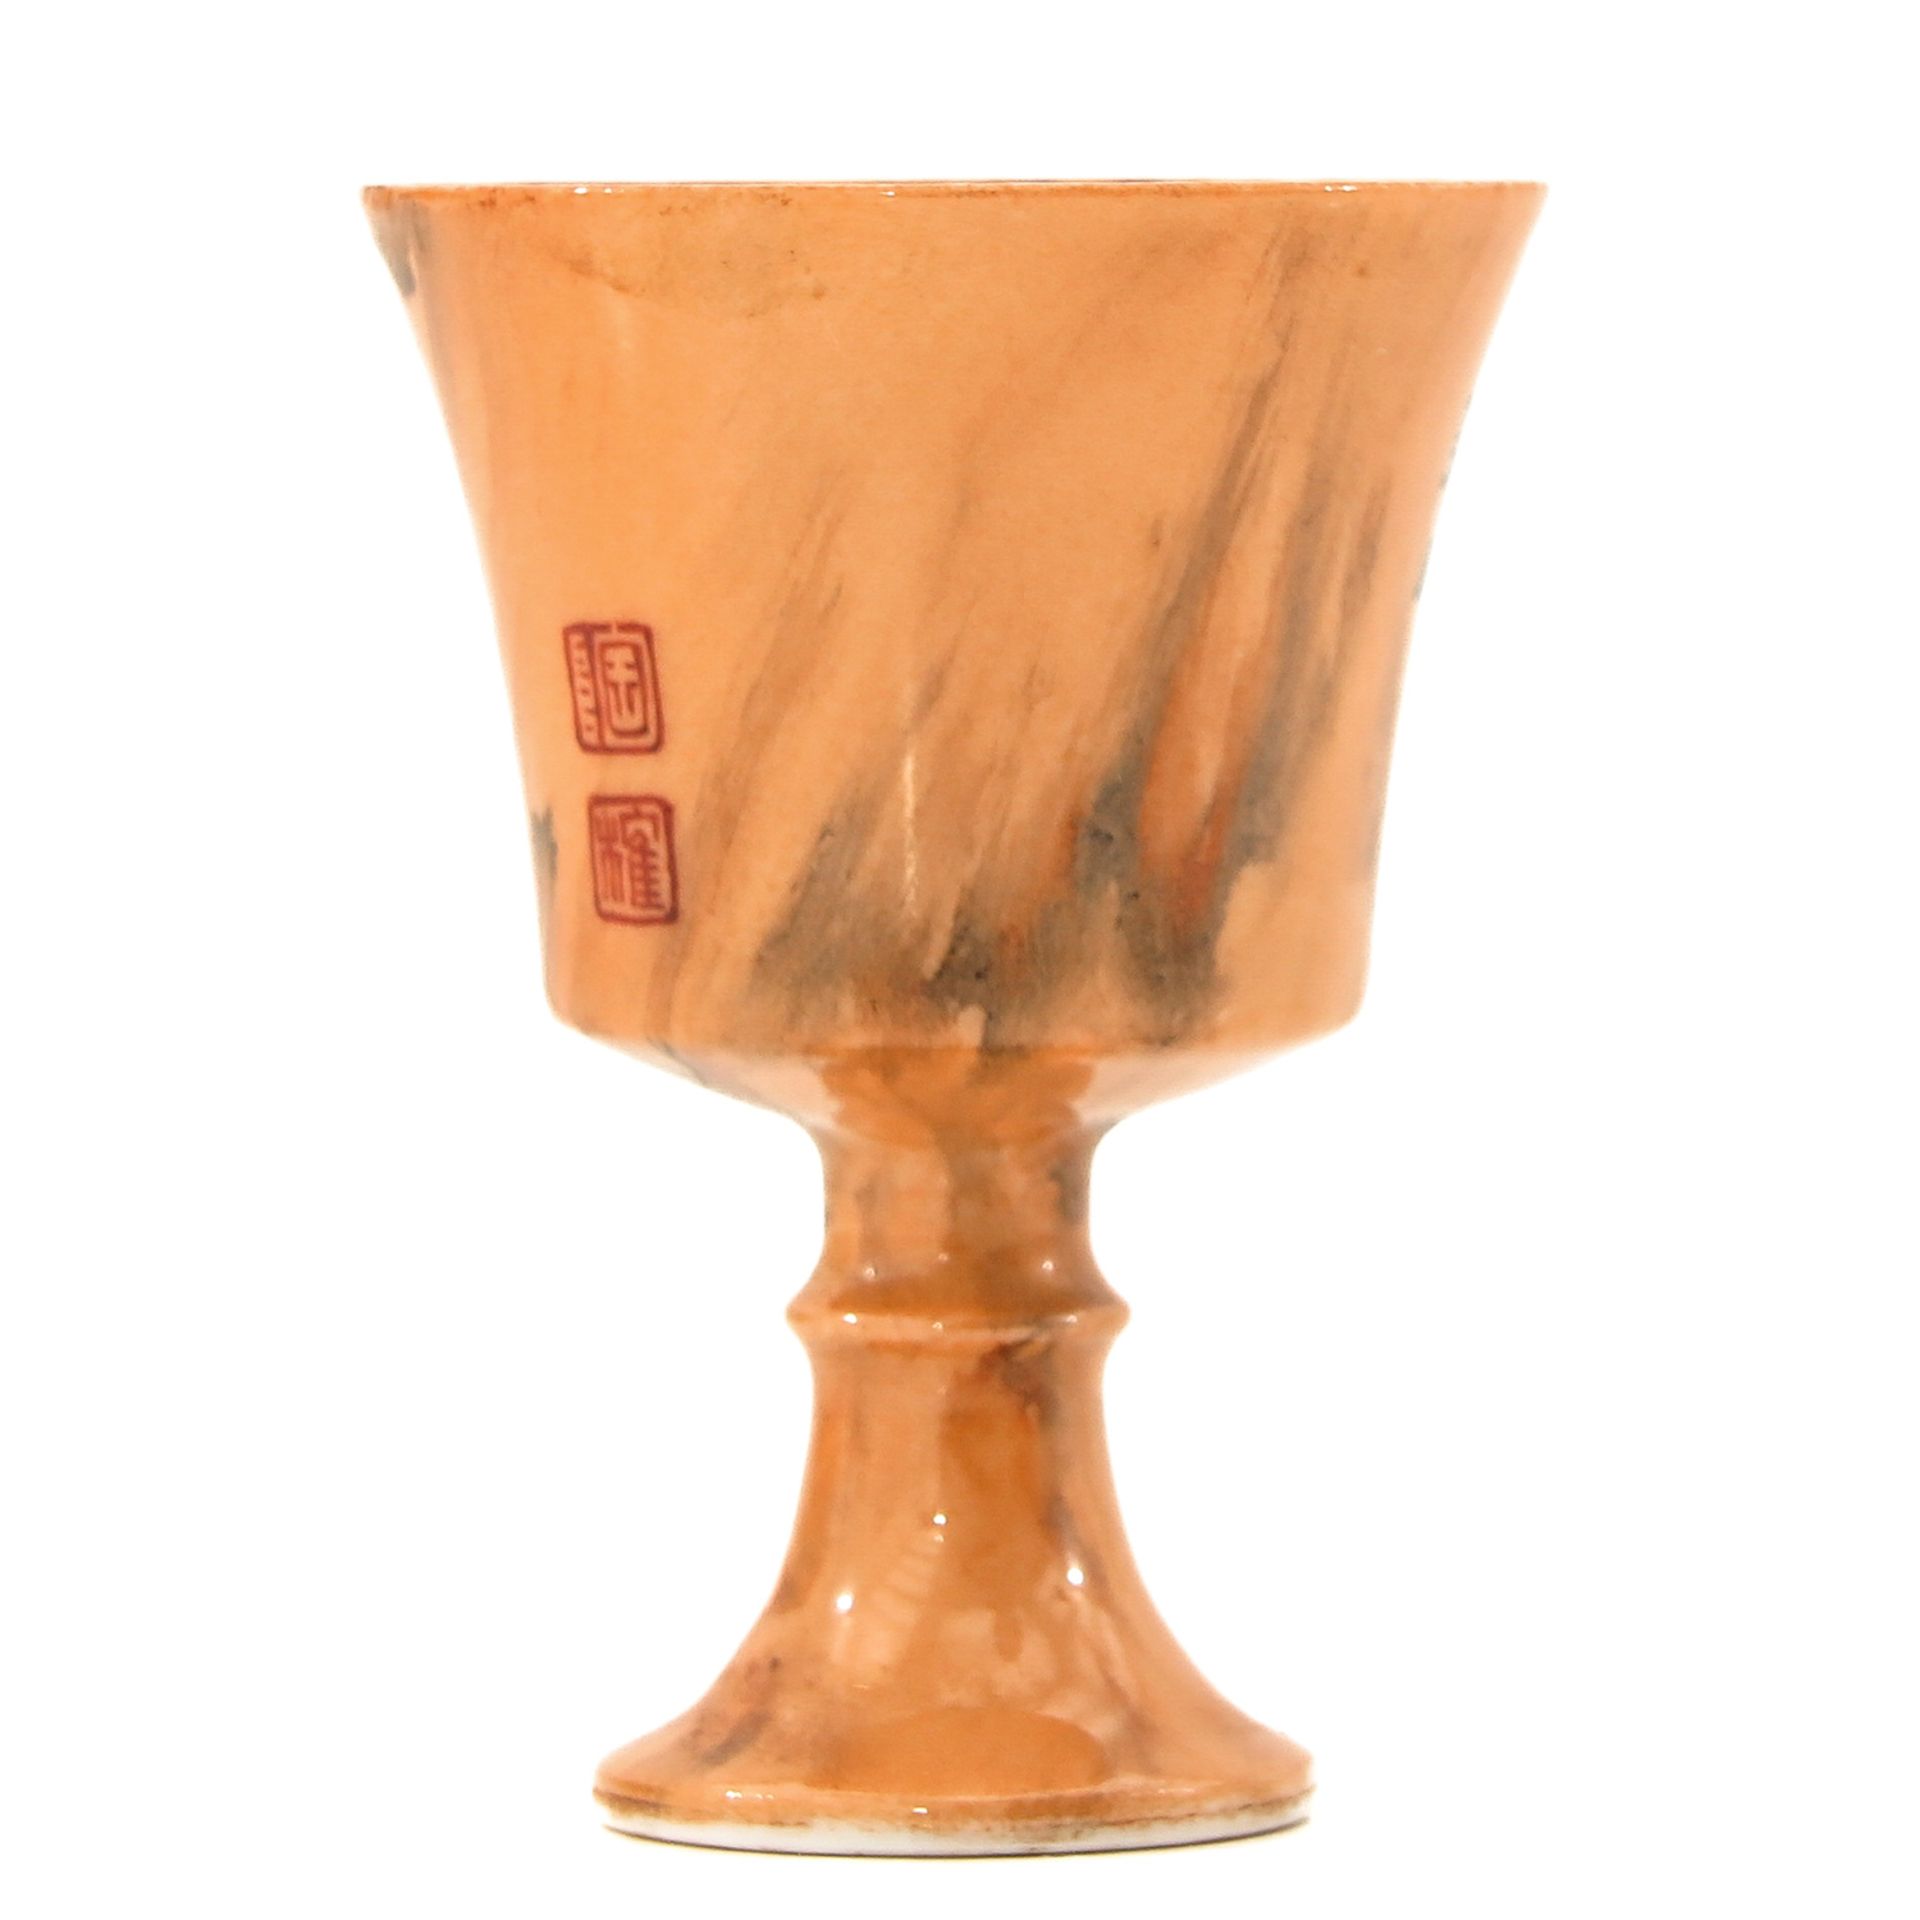 A Miniature Stem Cup - Bild 2 aus 10